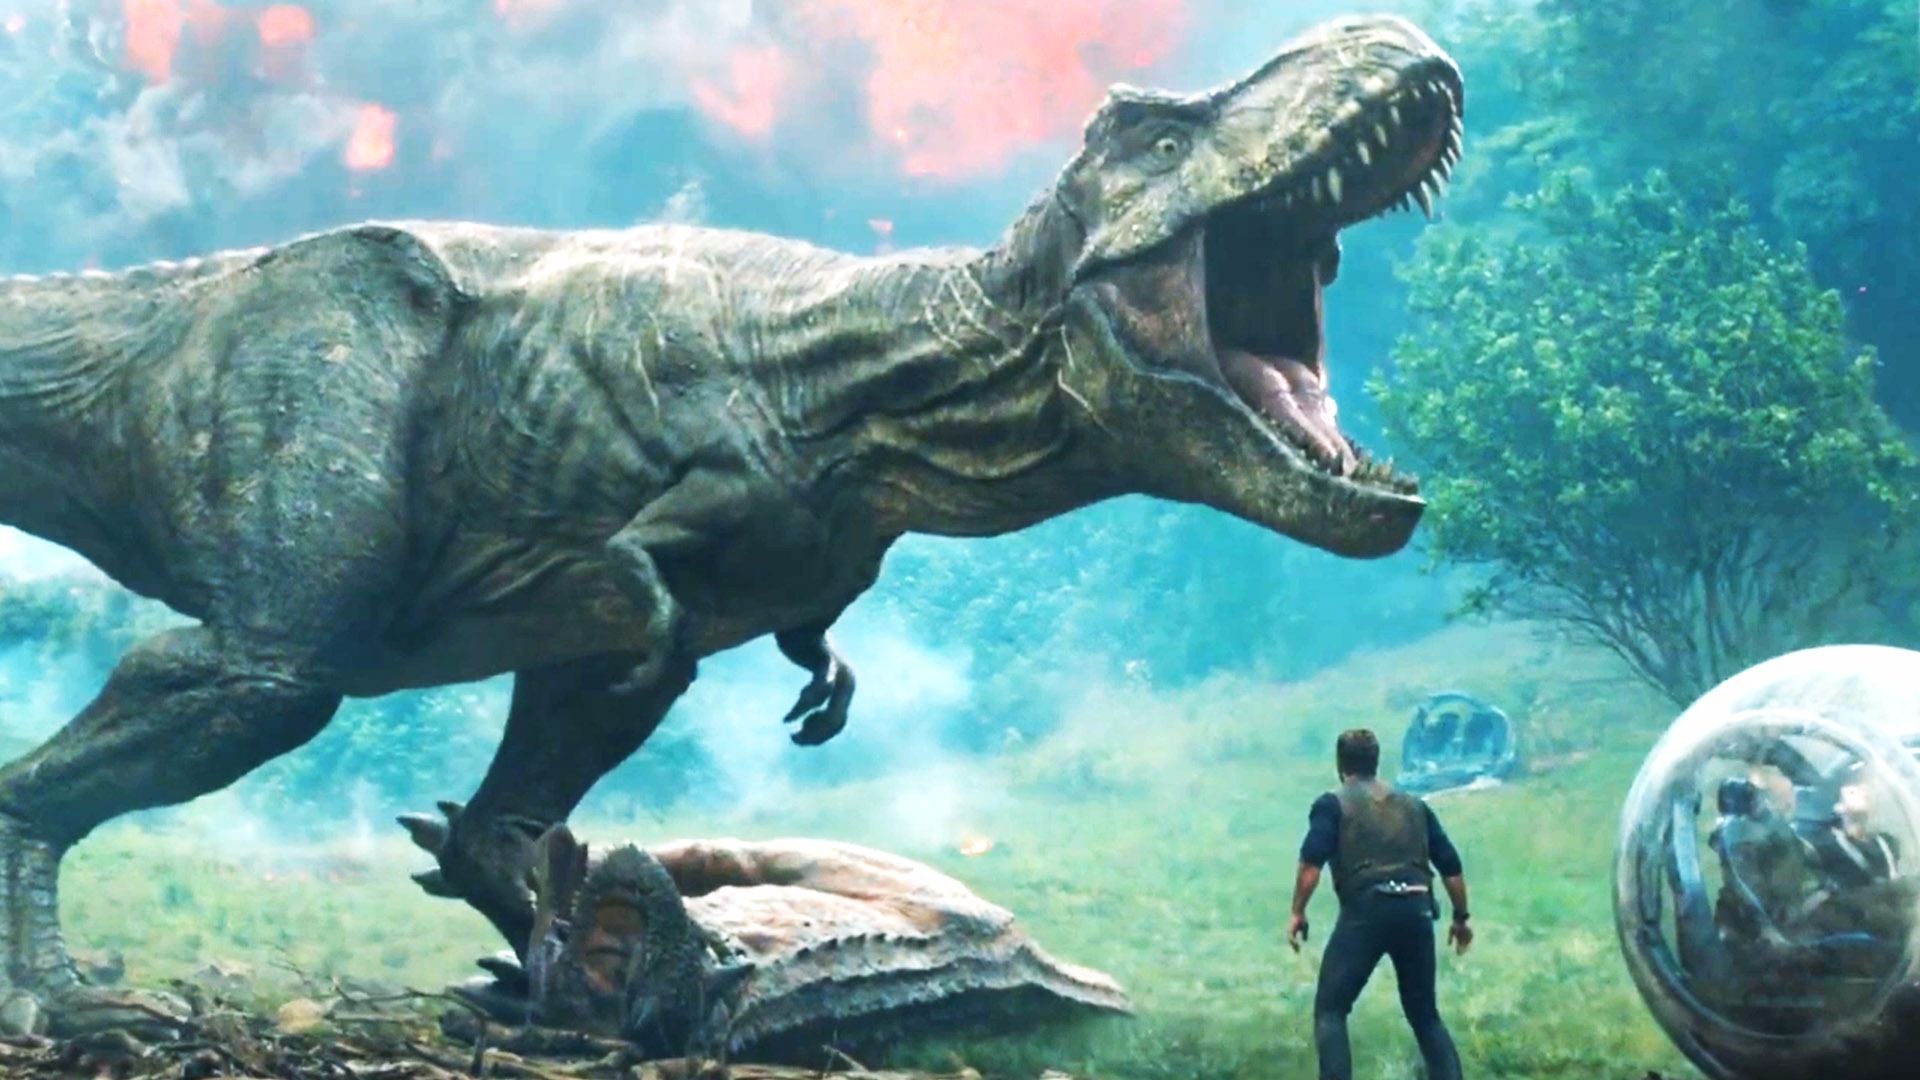 download the new version Jurassic World: Fallen Kingdom